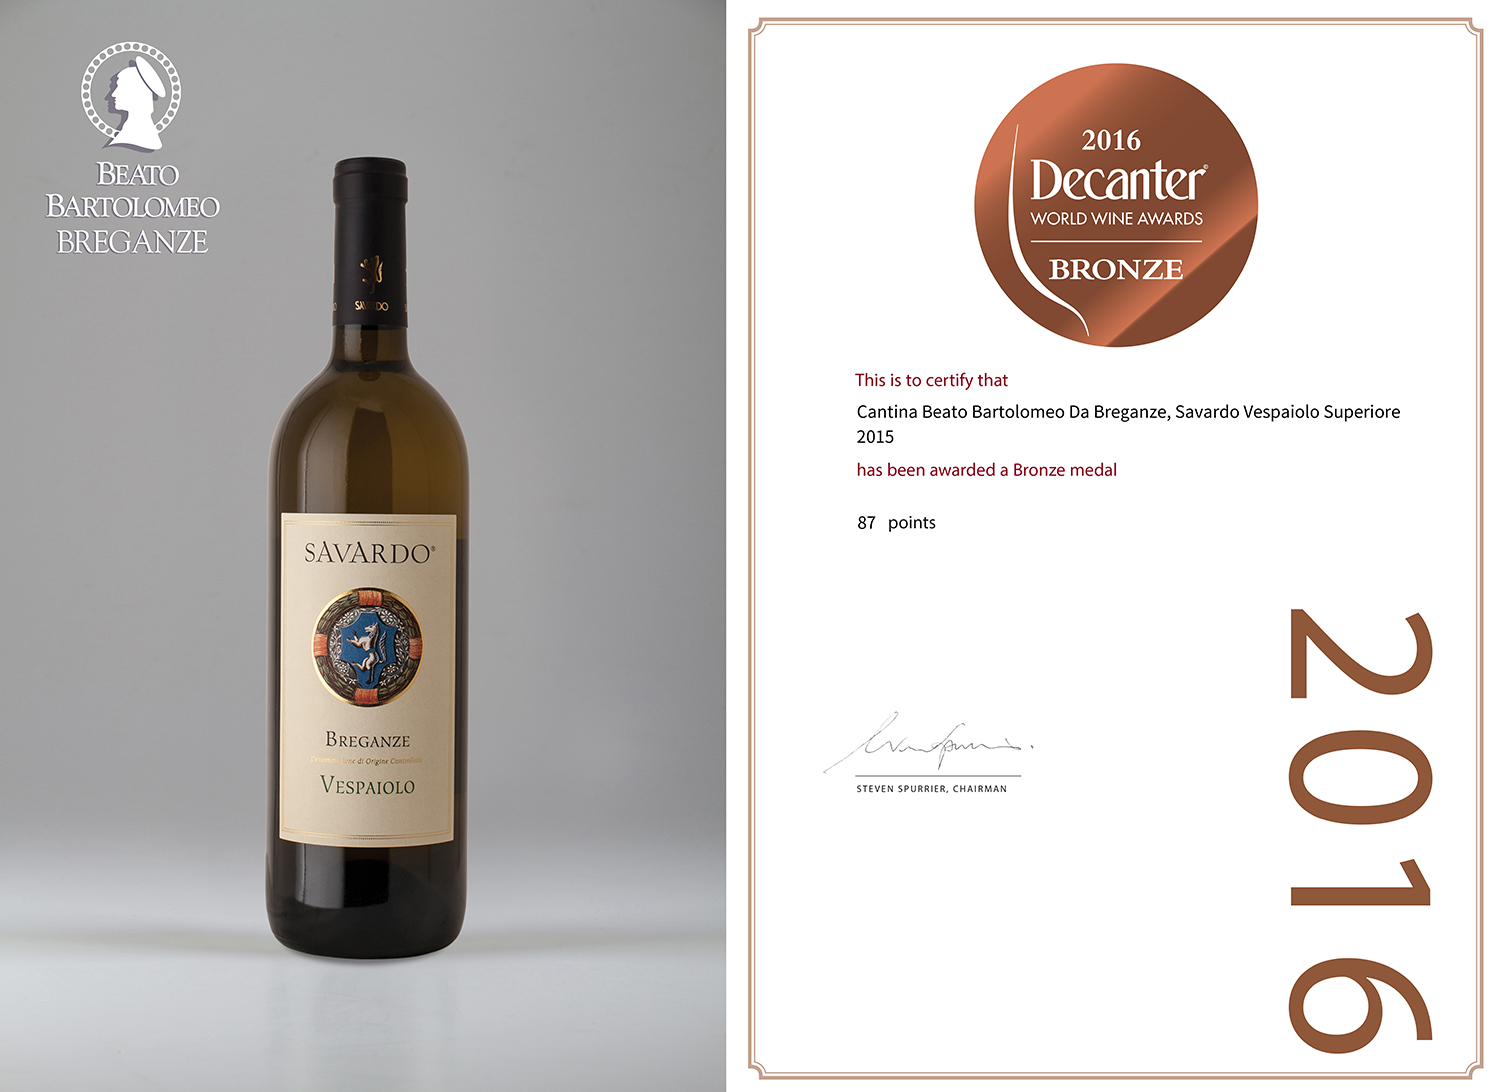 Decanter World Wine Awards 2016